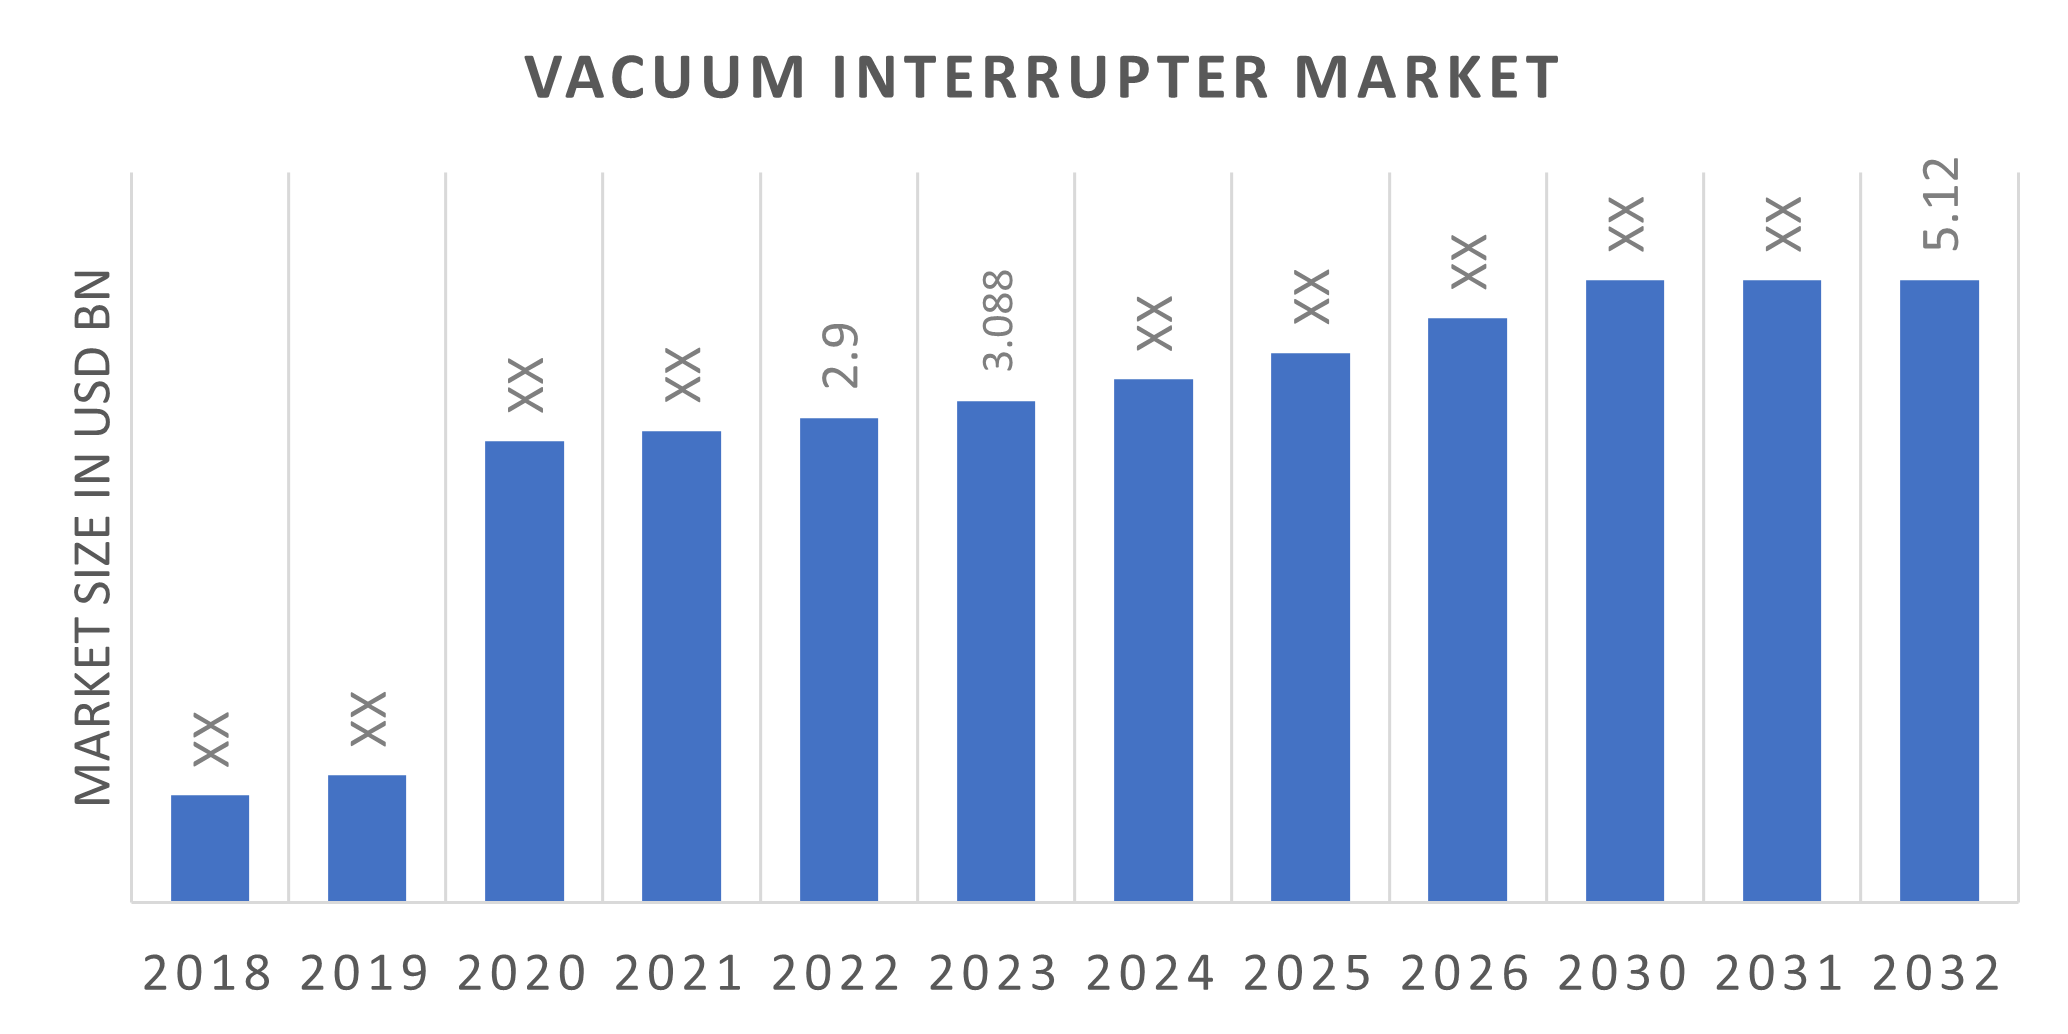 Global Vacuum Interrupter Market Overview